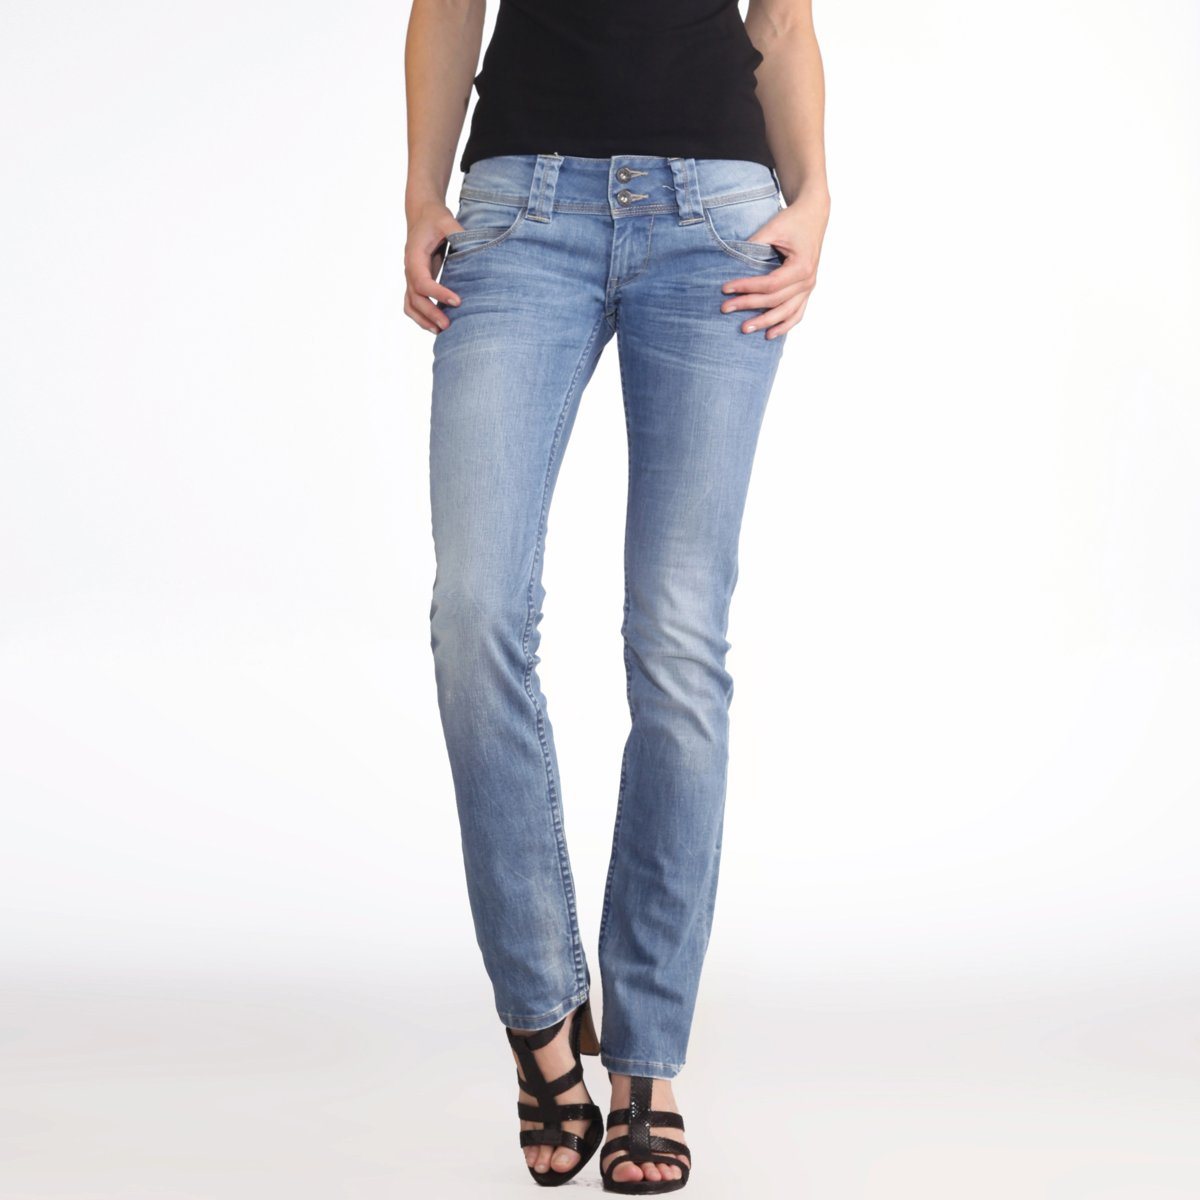 Jeans Femme La Redoute - Jean VENUS Pepe jeans Prix 90,00 Euros